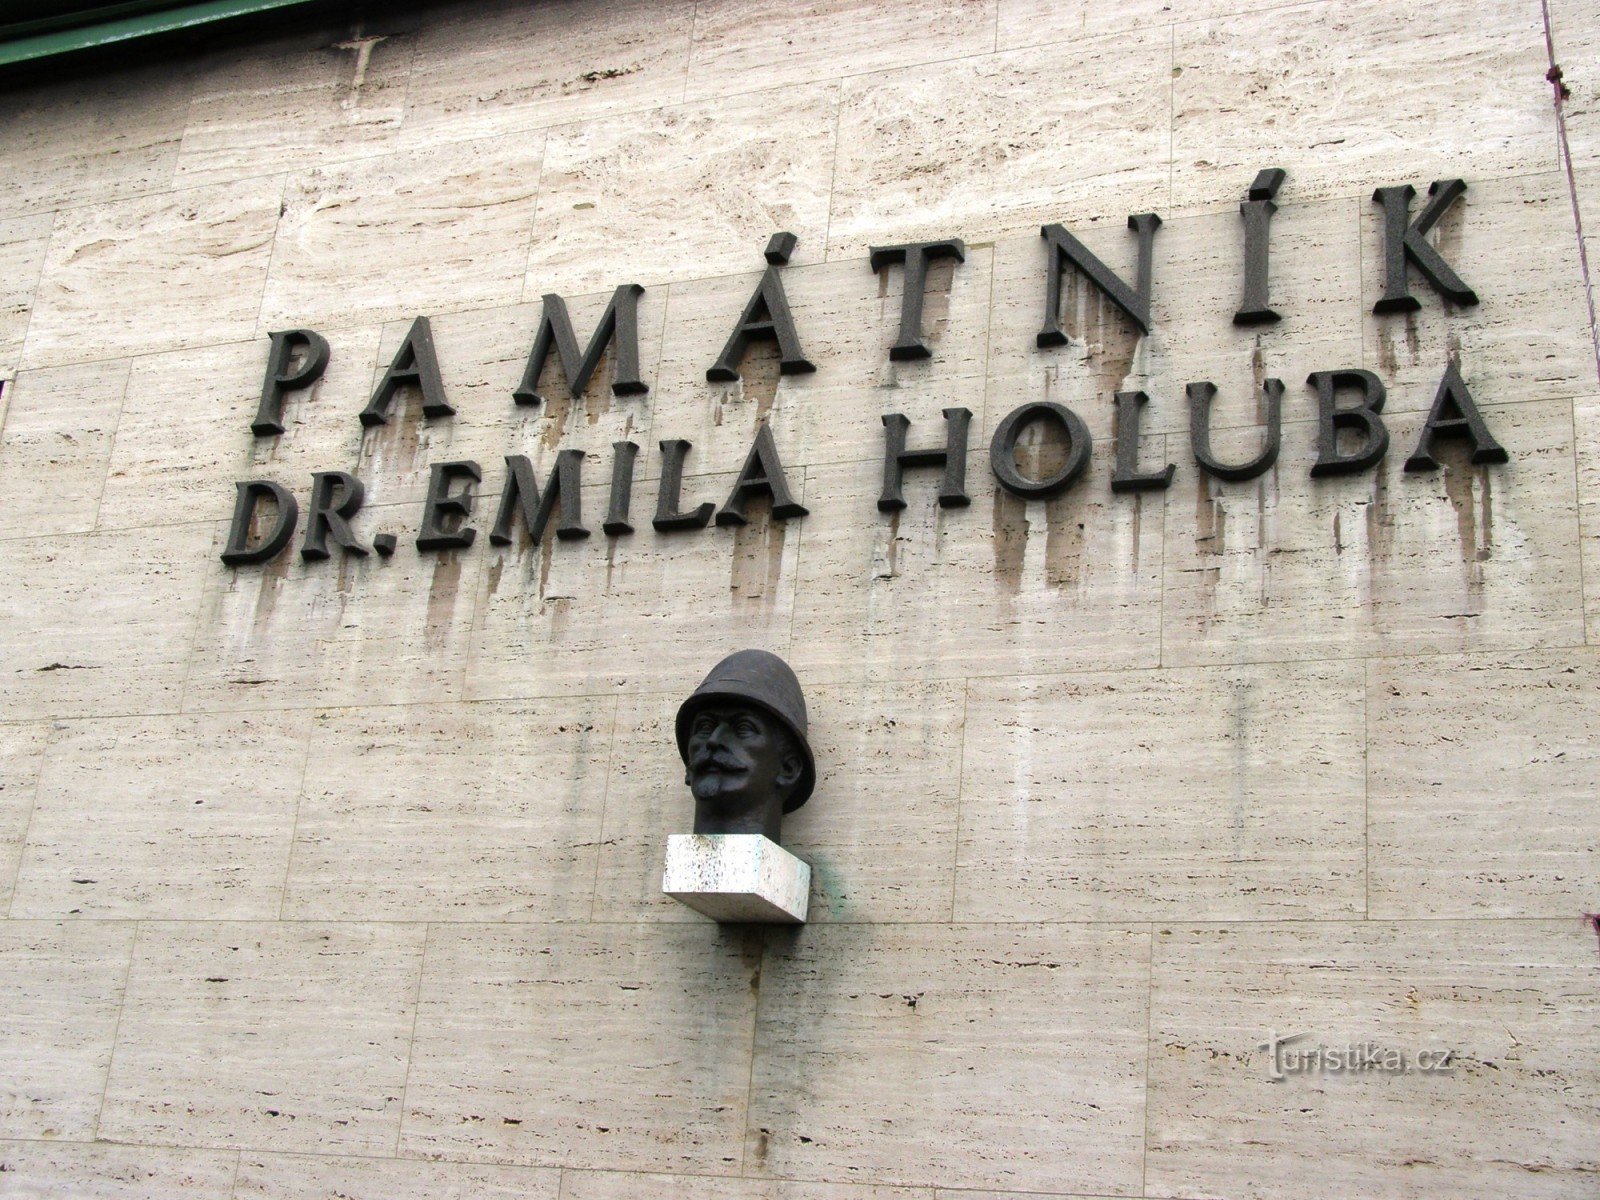 Holice - memoriale al Dr. Emil Holuba